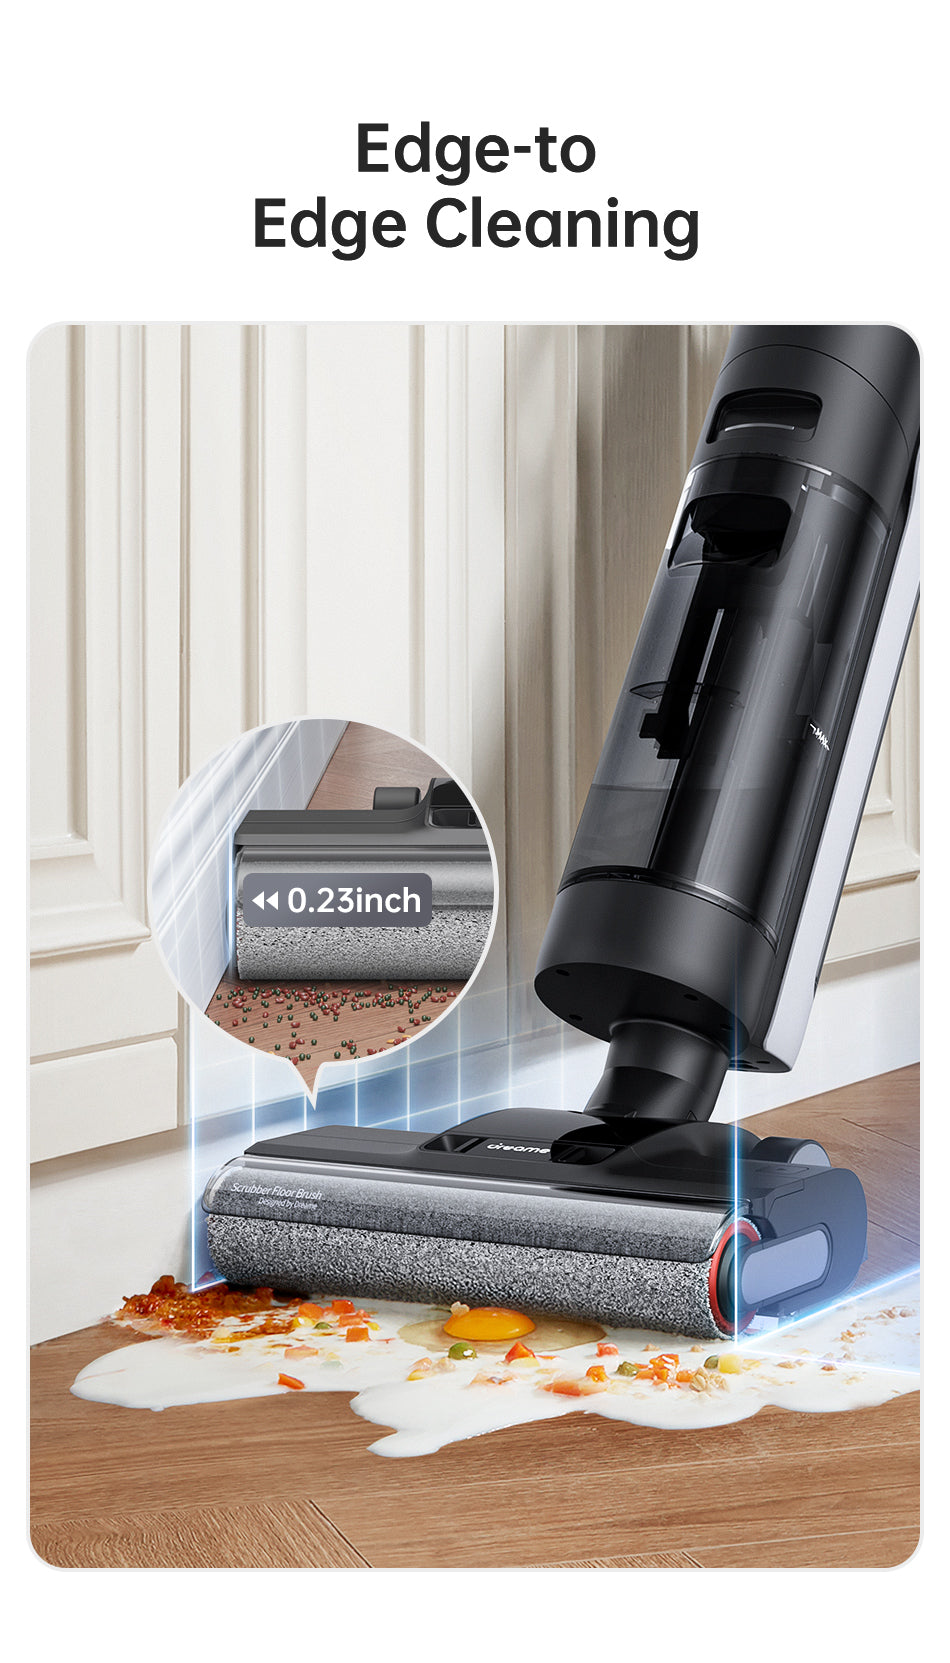 Dreame H12 Pro Wet & Dry Vacuum Review « Blog